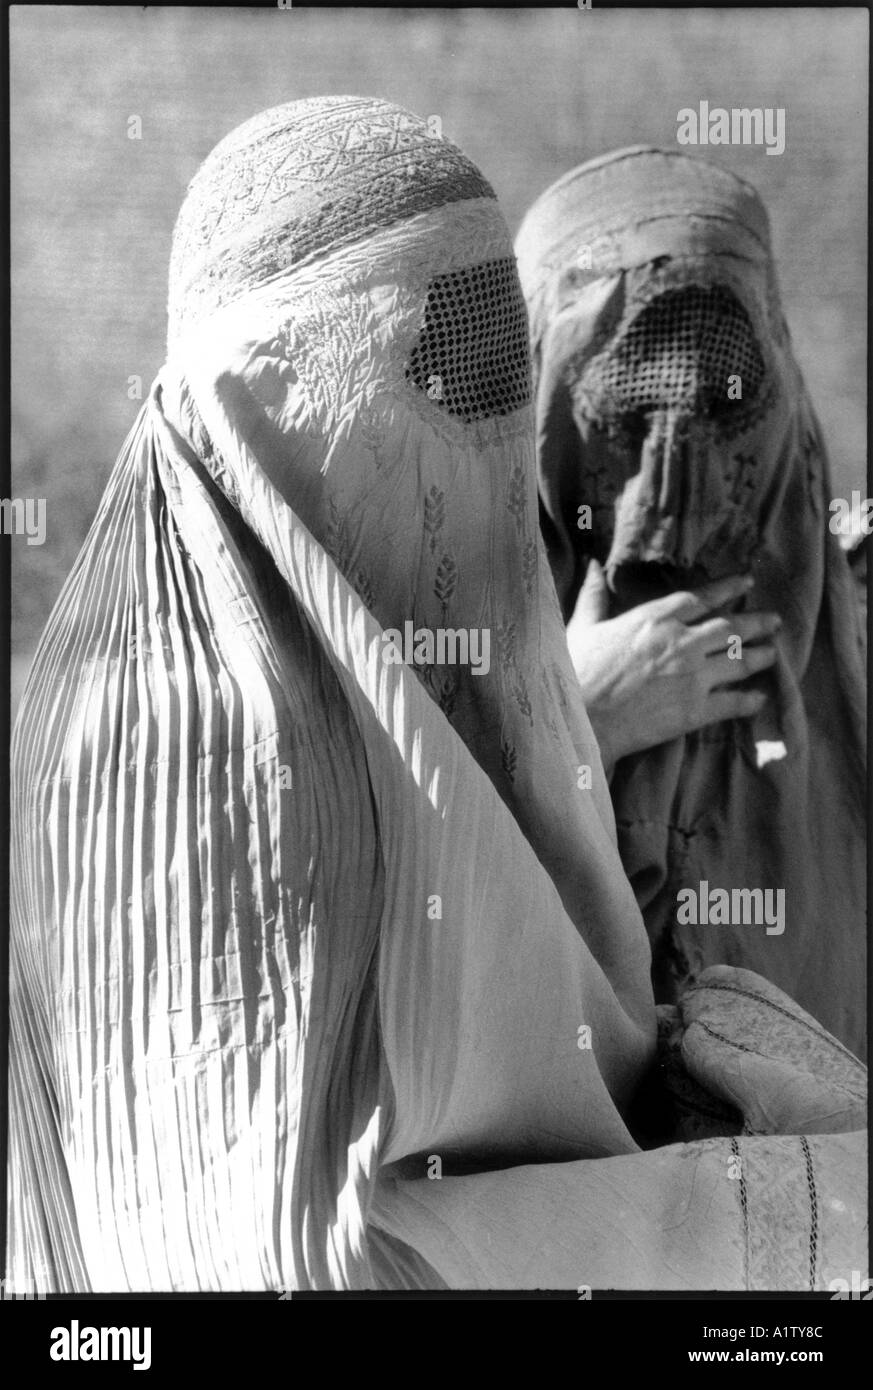 Women In Afghanistan .Widows wearing burqas wait for food distribution Stock Photo